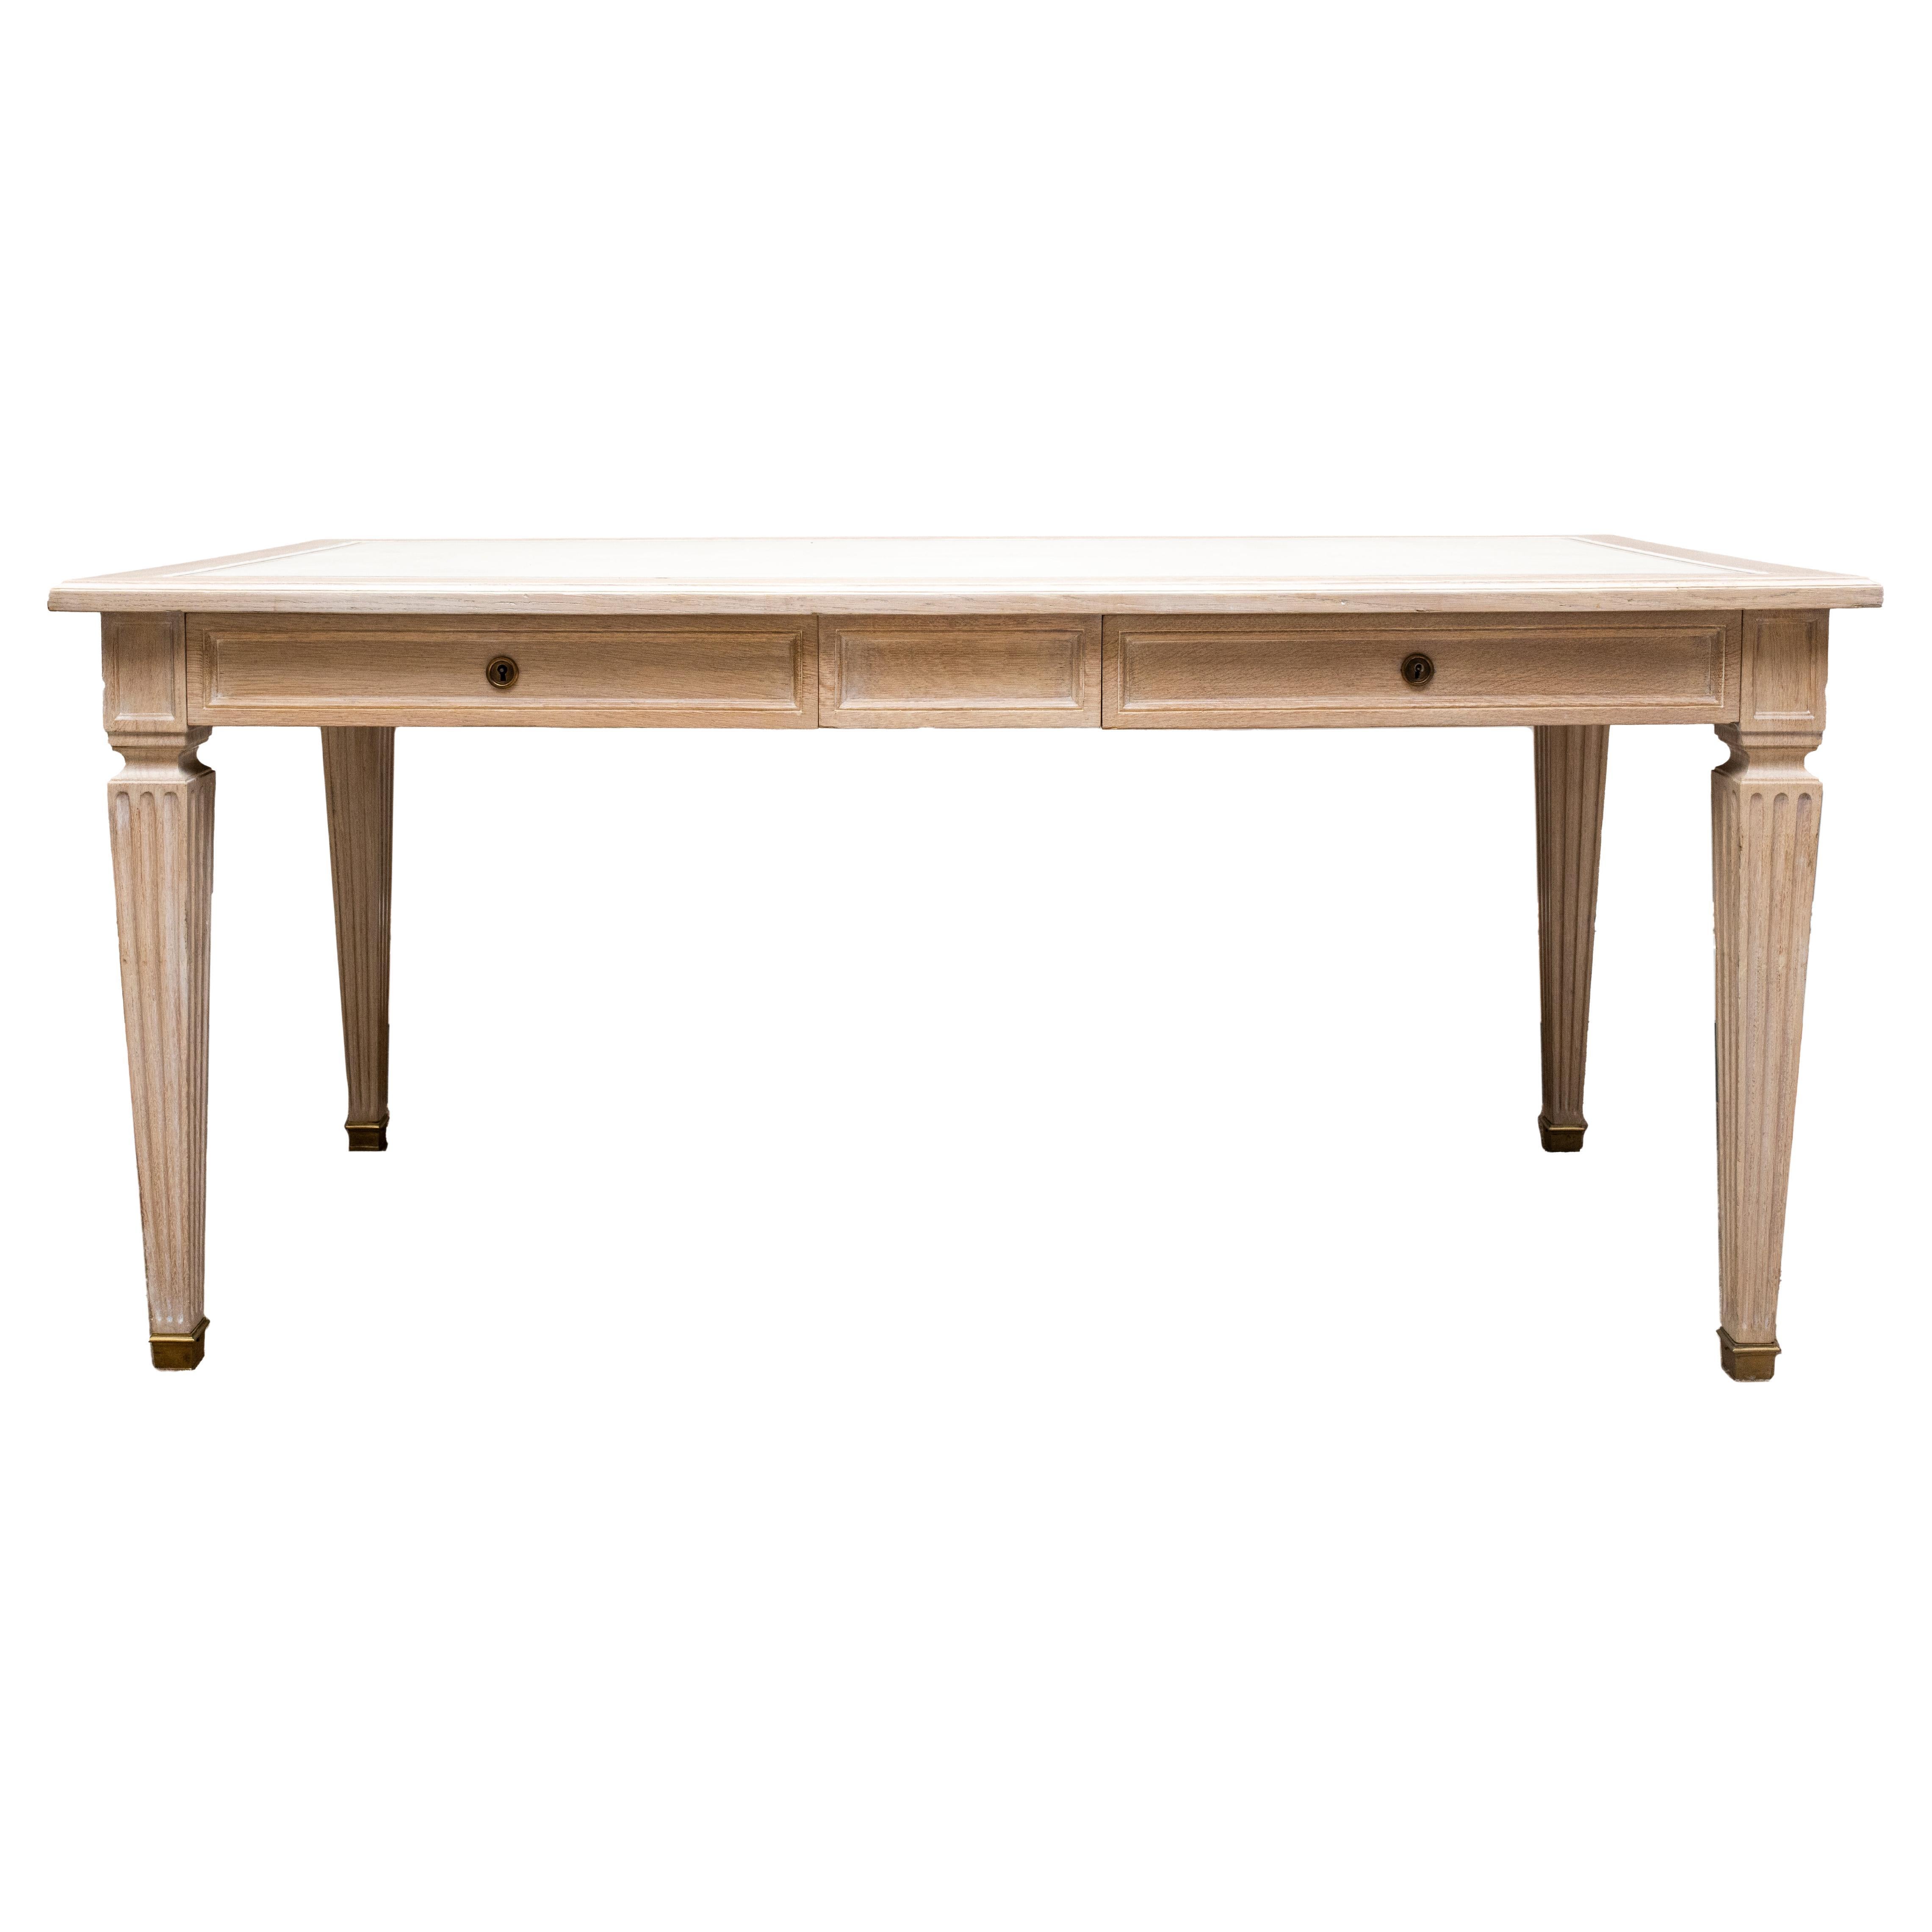 Neoclassical Revival Desk or Center Table